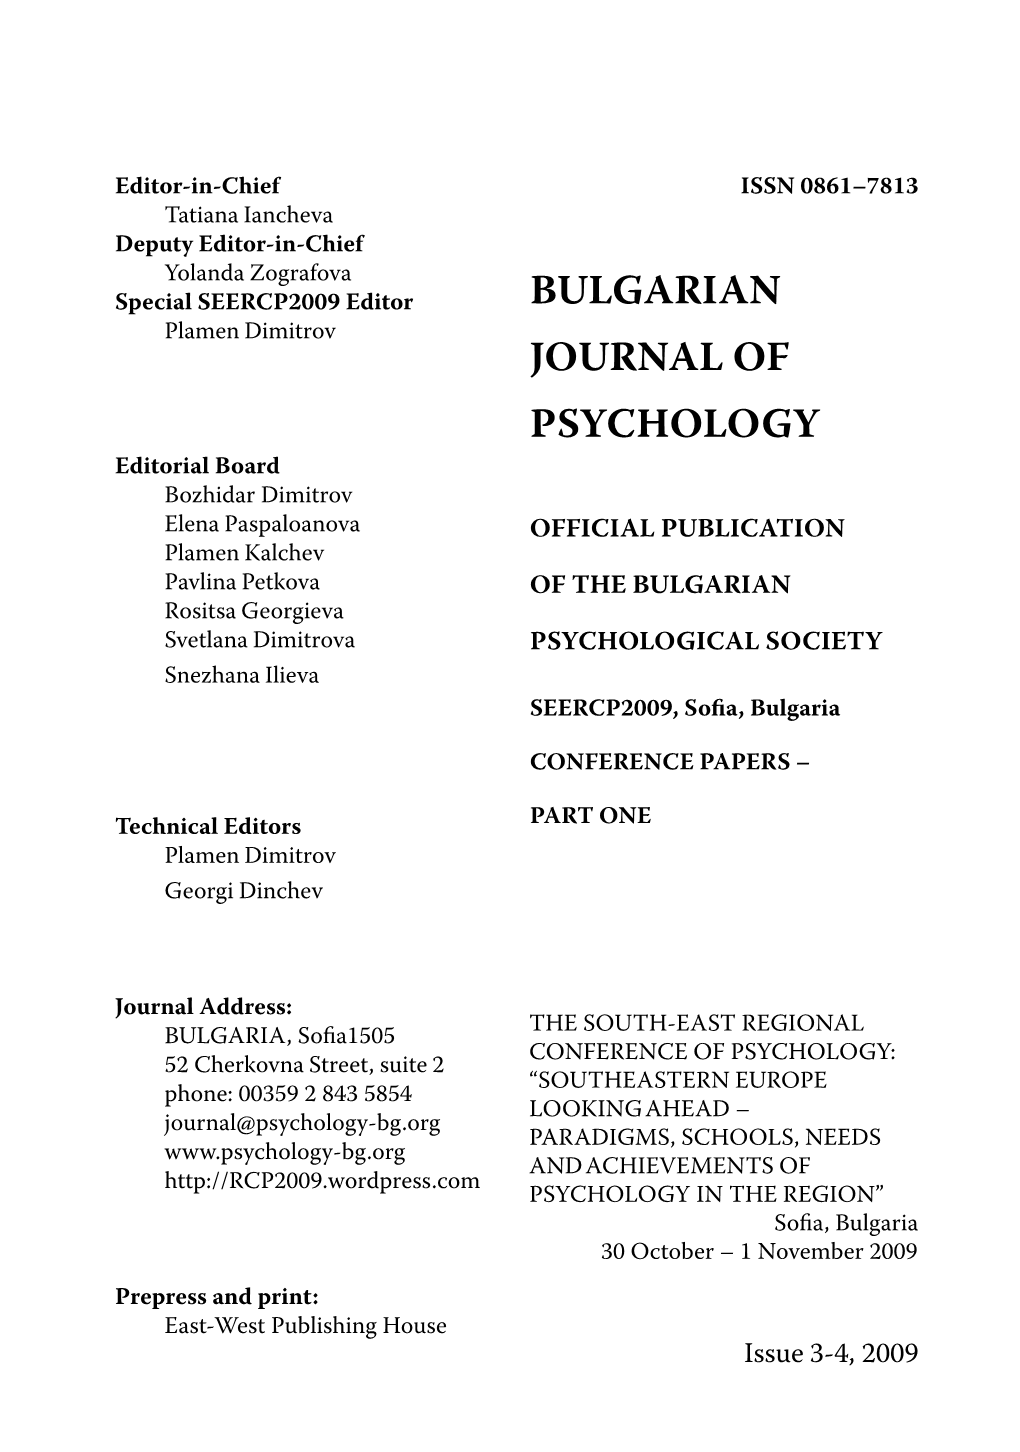 Bulgarian Journal of Psychology